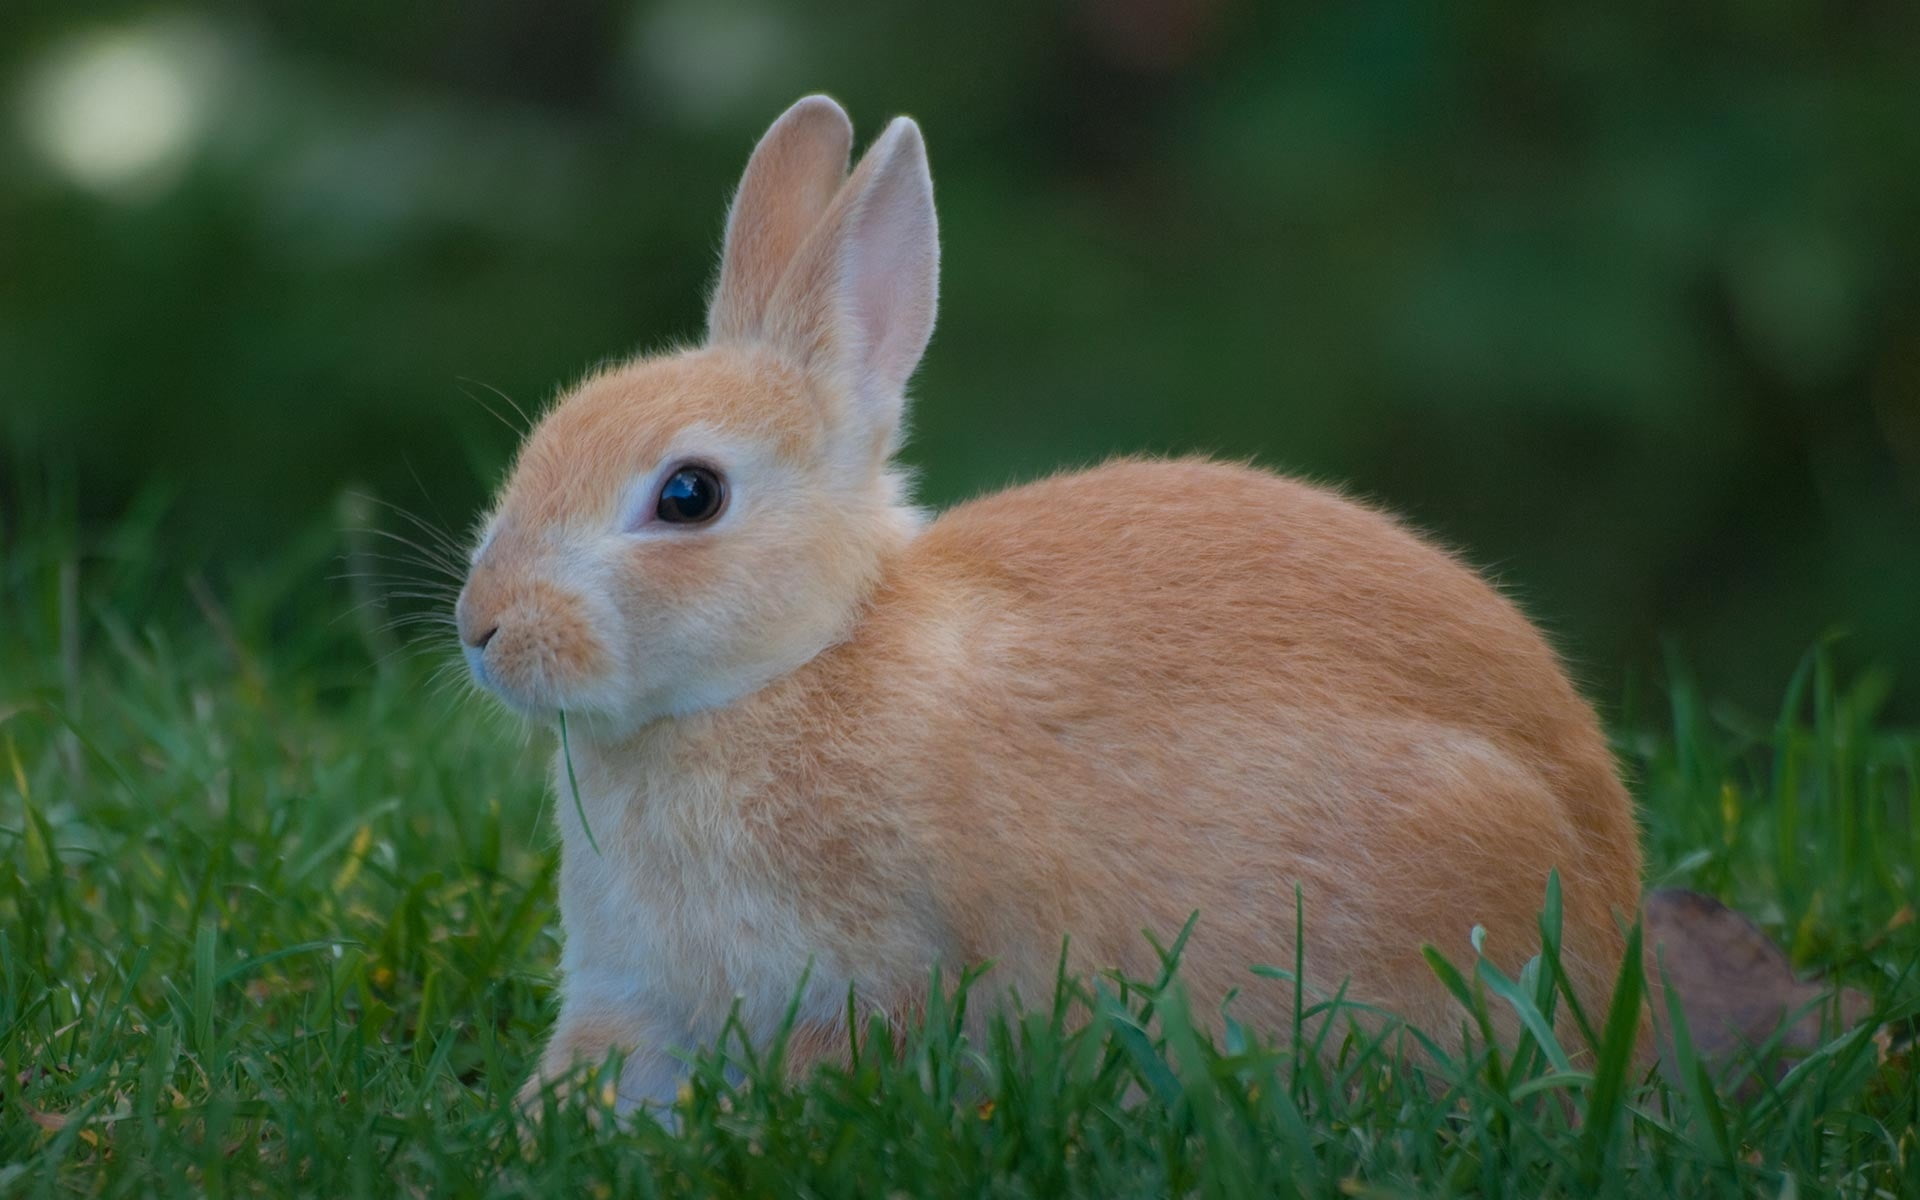 brown and white rabbit, grass, waiting, rabbit - Animal, cute